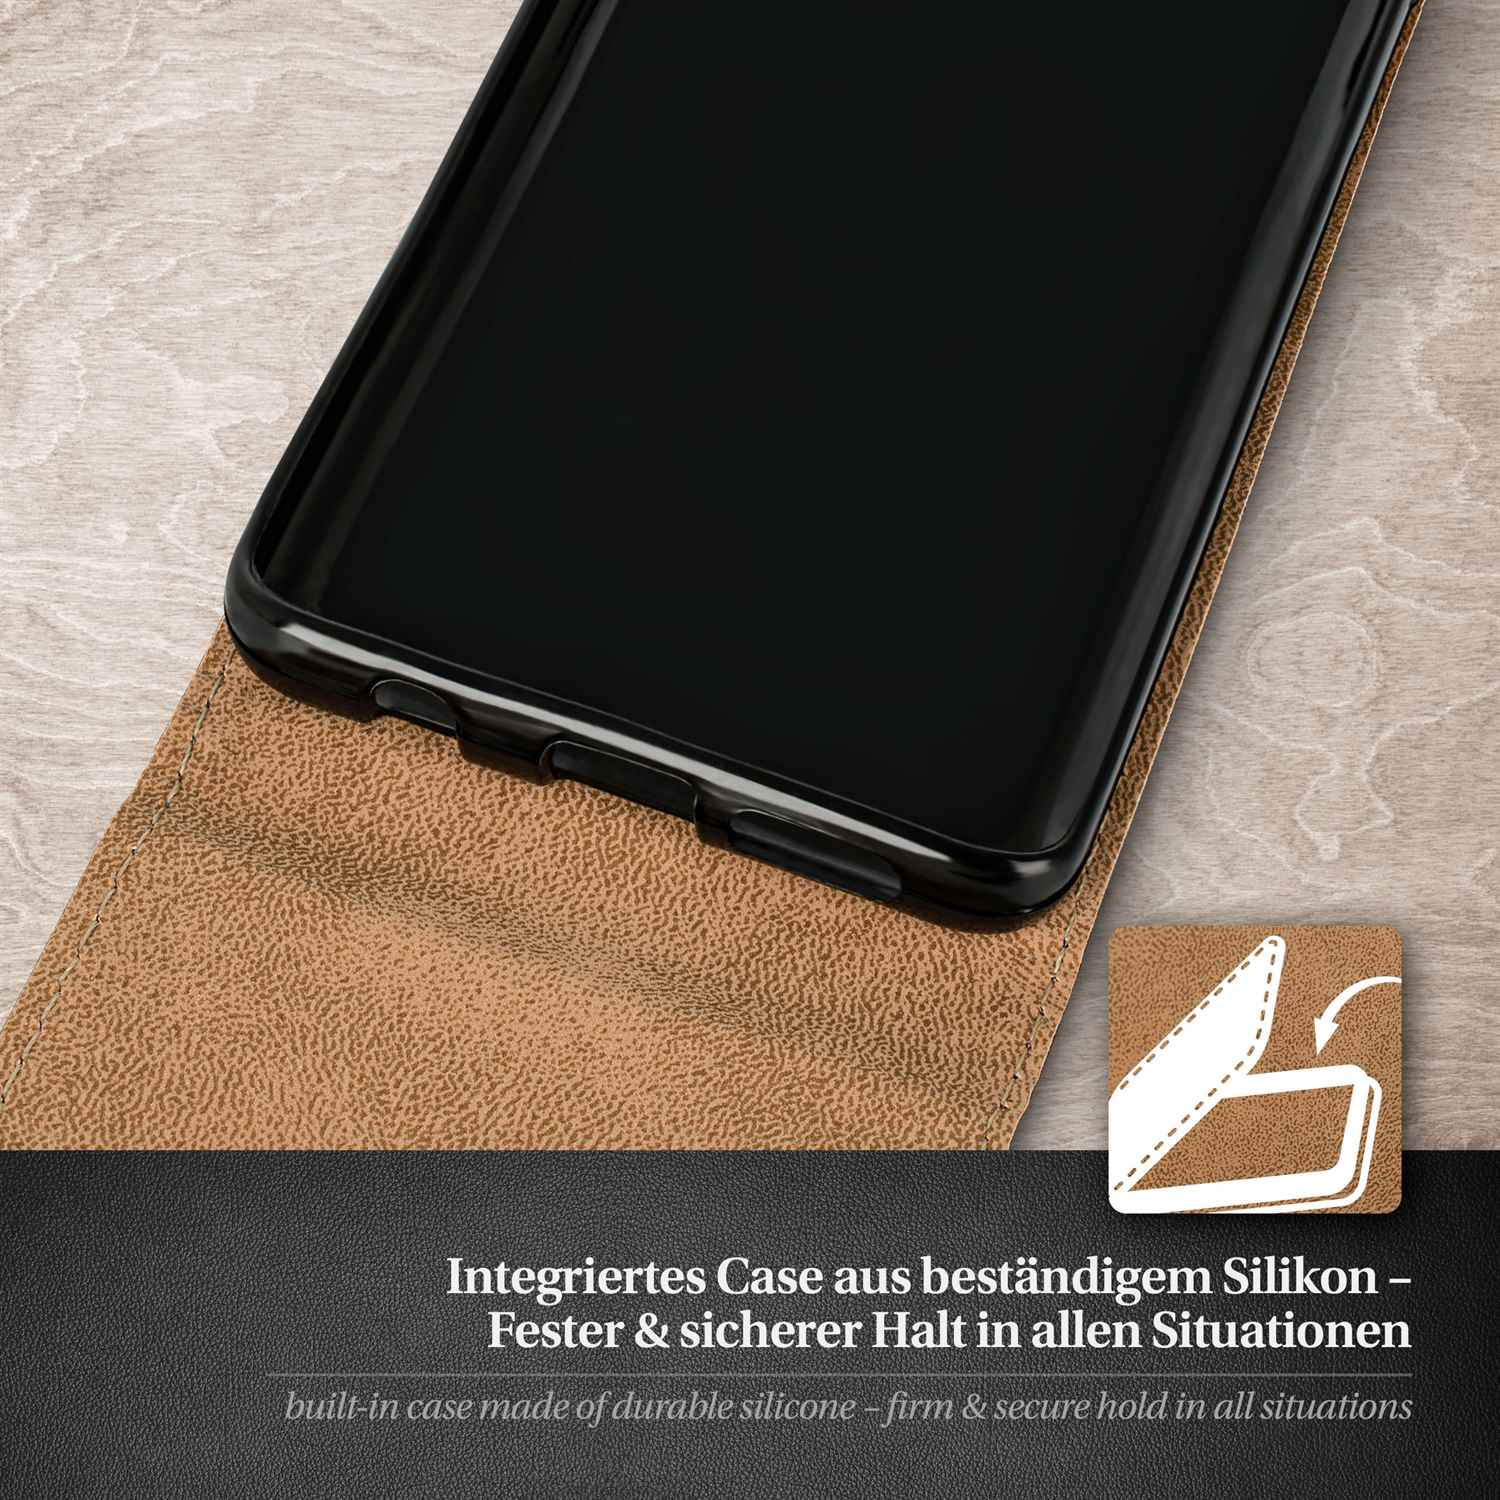 Cover, Case, 5.1, Deep-Black Flip MOEX Flip Nokia,